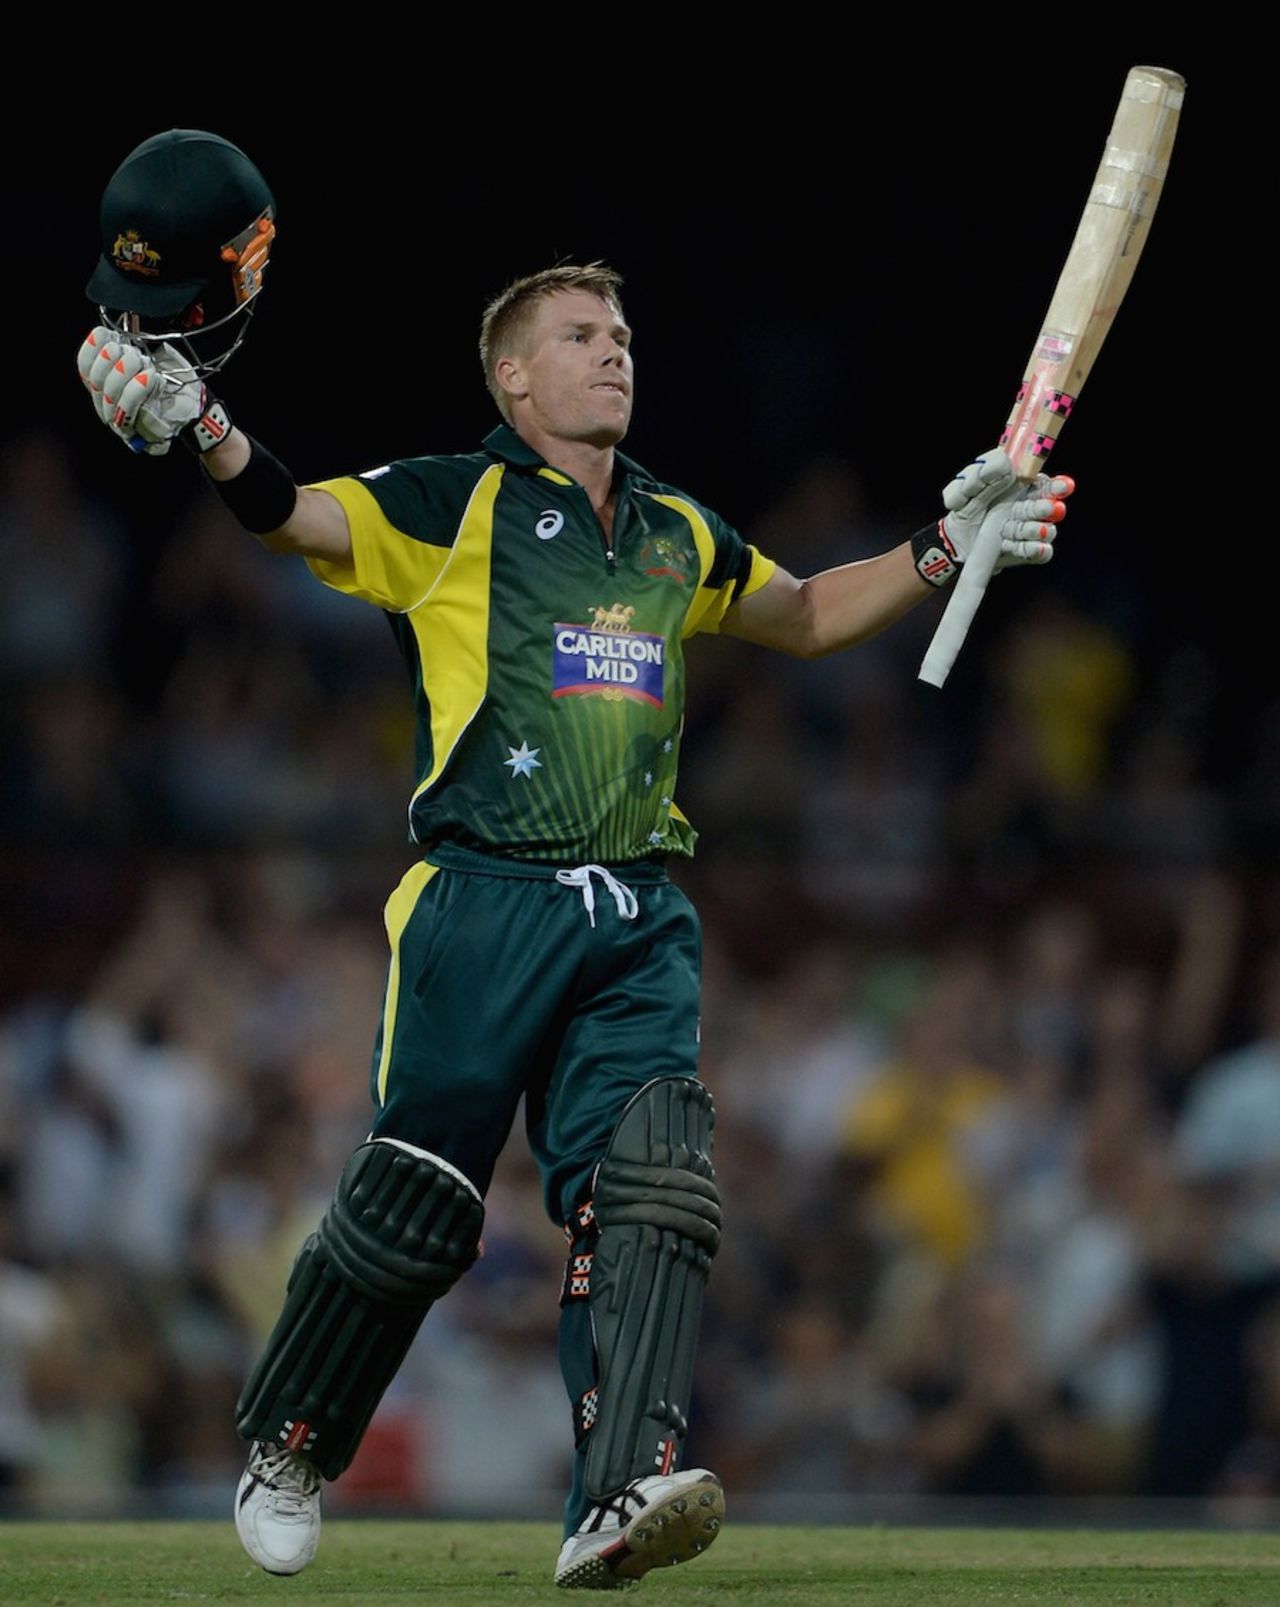 David Warner scored his third ODI hundred, Australia v England, Carlton Mid Tri-Series, Sydney, January 16, 2015